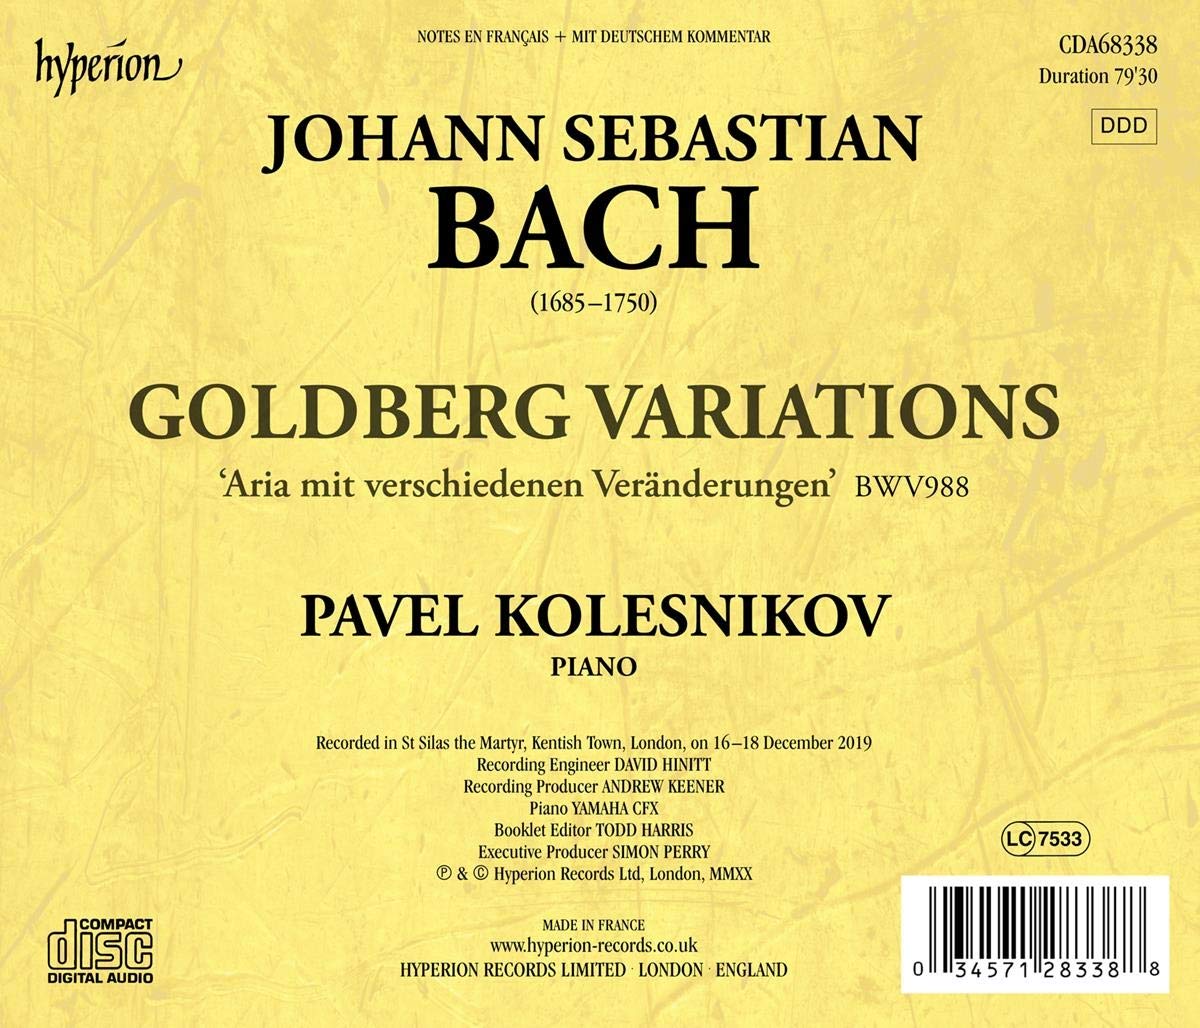 BACH: GOLDBERG VARIATIONS - PAVEL KOLESNIKOV